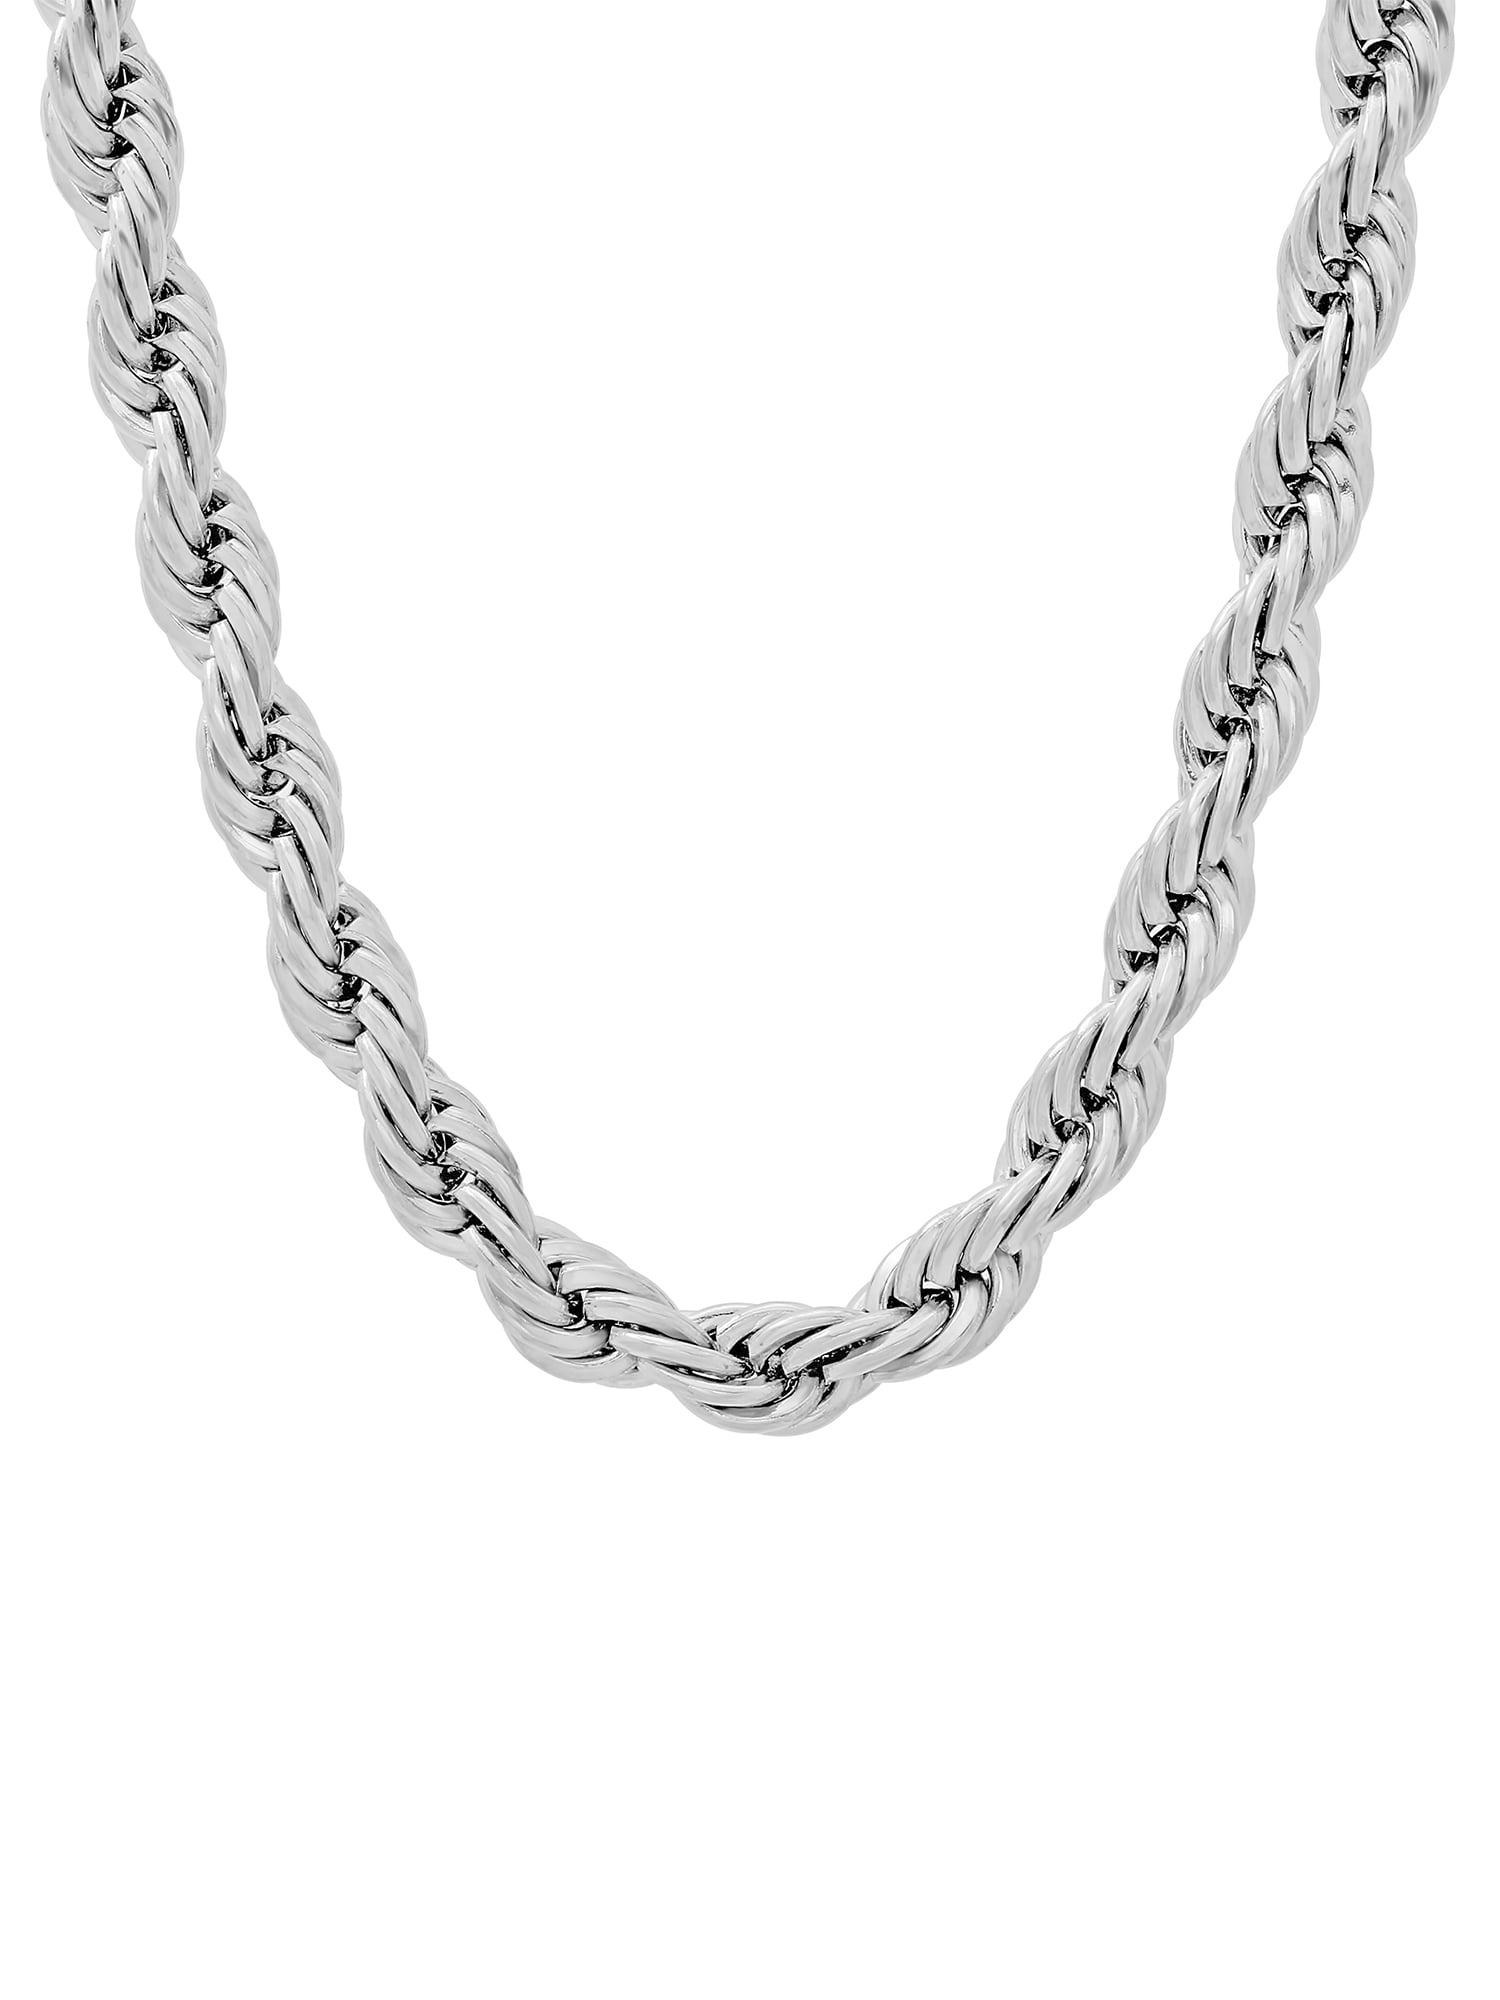 Details about   18-40"MEN Stainless Steel 6mm Black Silver Box Link Chain Necklace Bracelet SET 